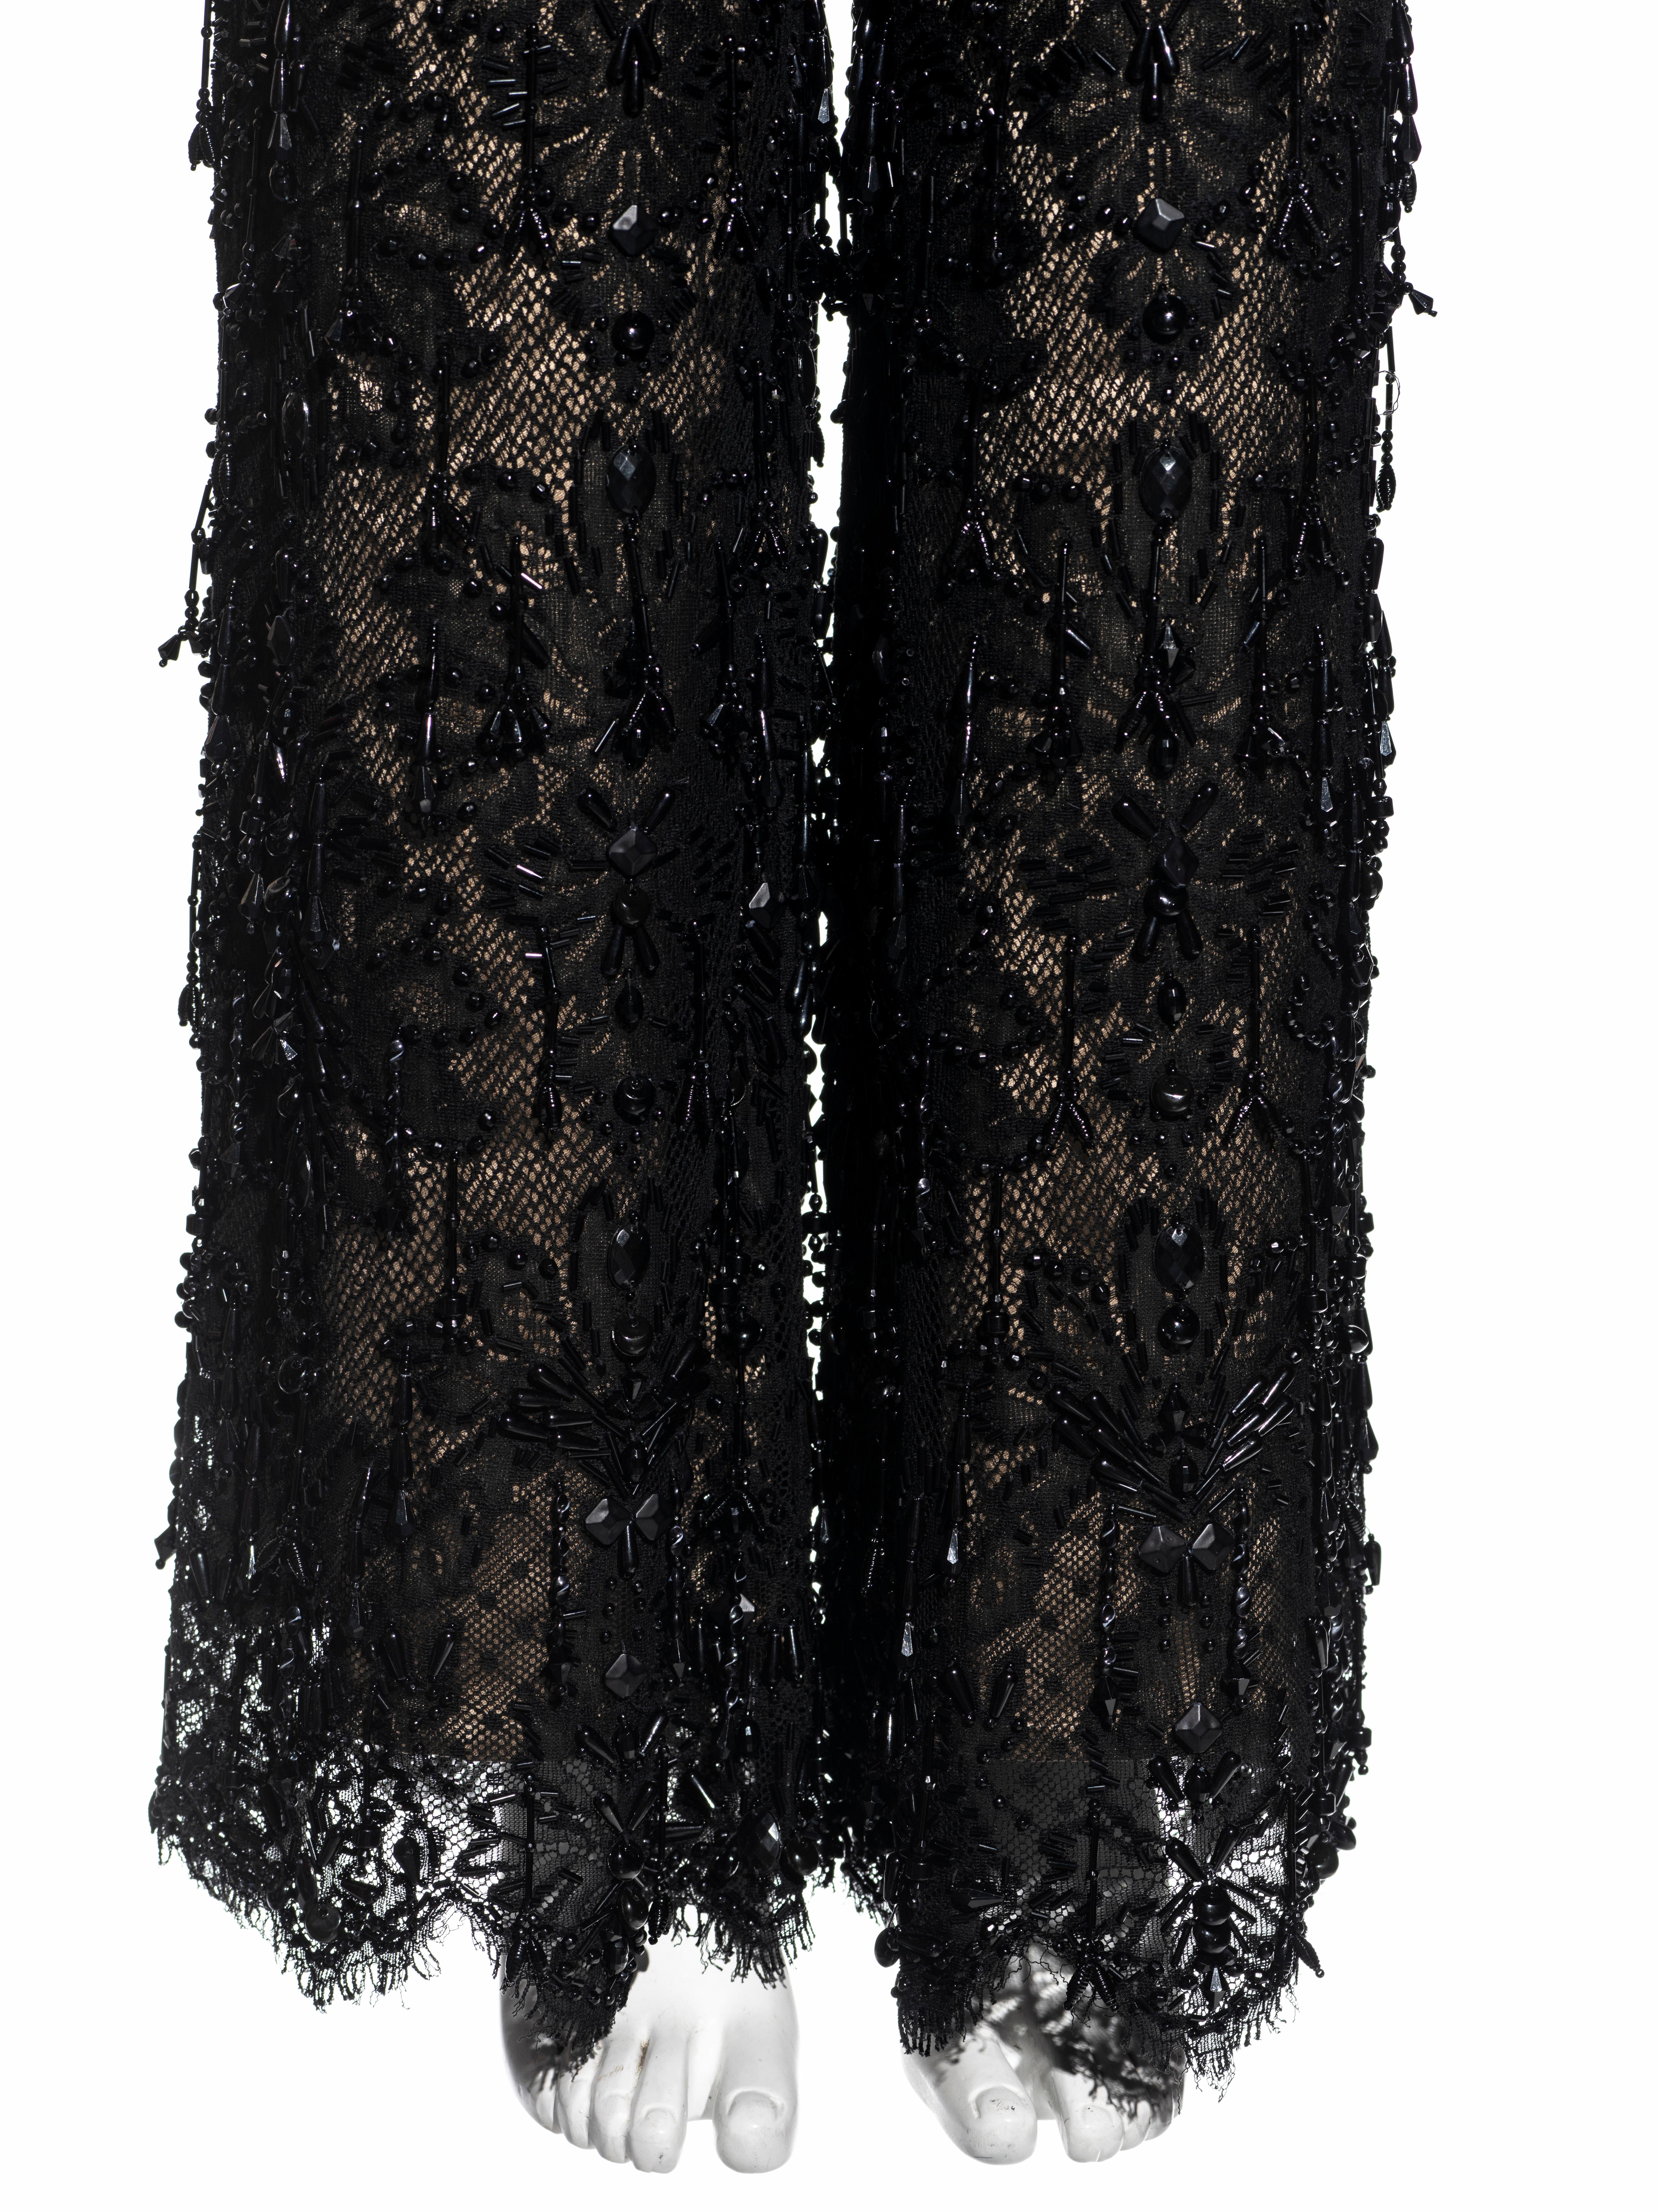 Black Gianfranco Ferré black beaded lace evening pants, ss 2002 For Sale